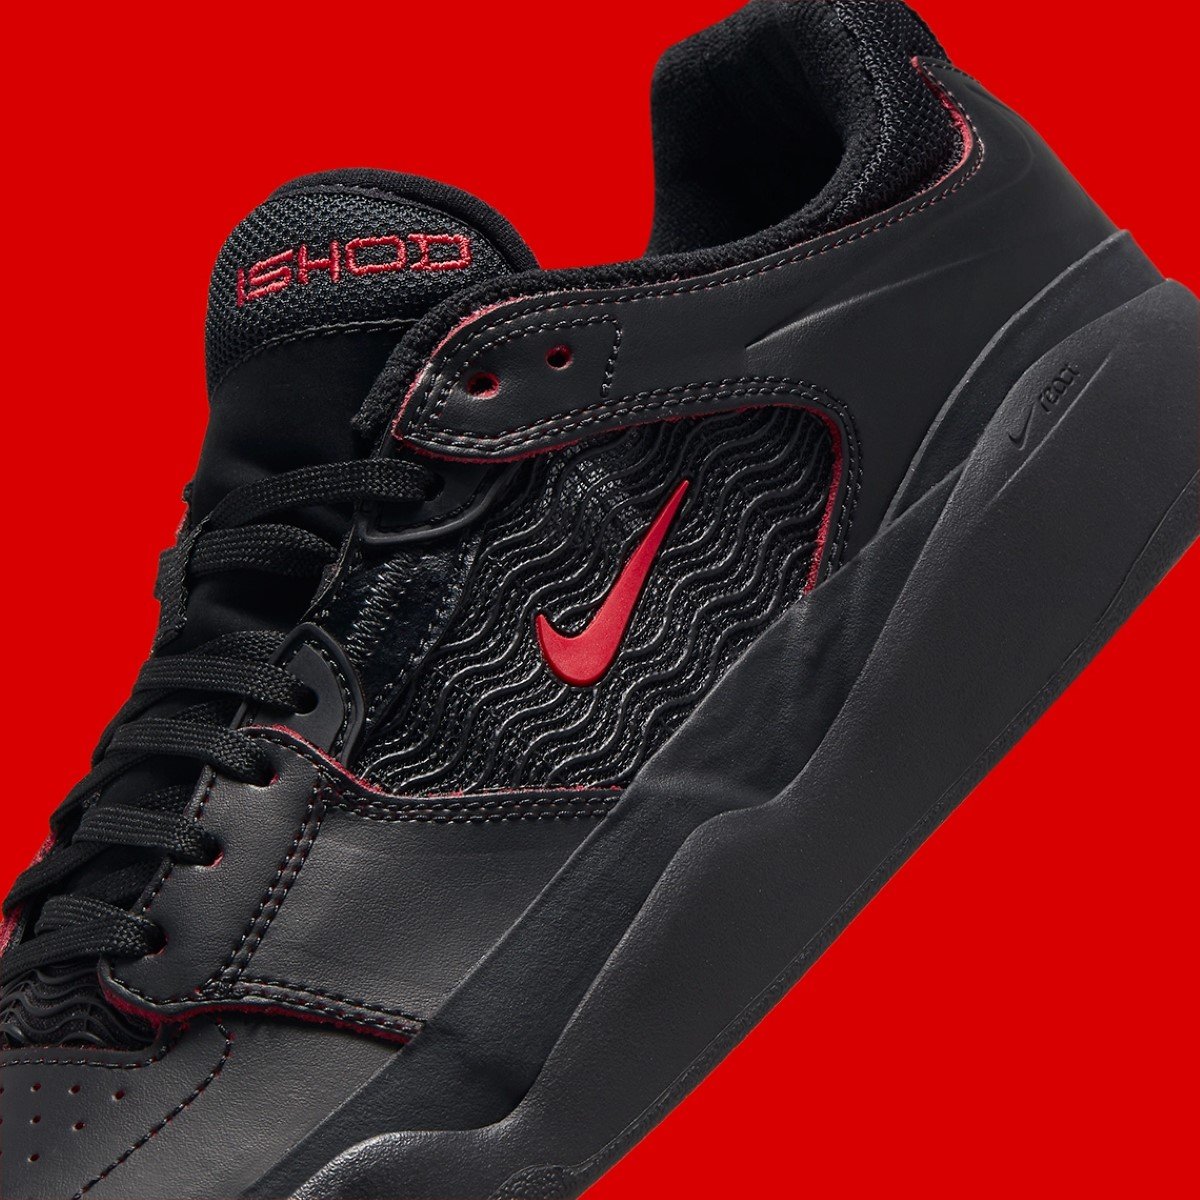 Nike SB Ishod "Bred"